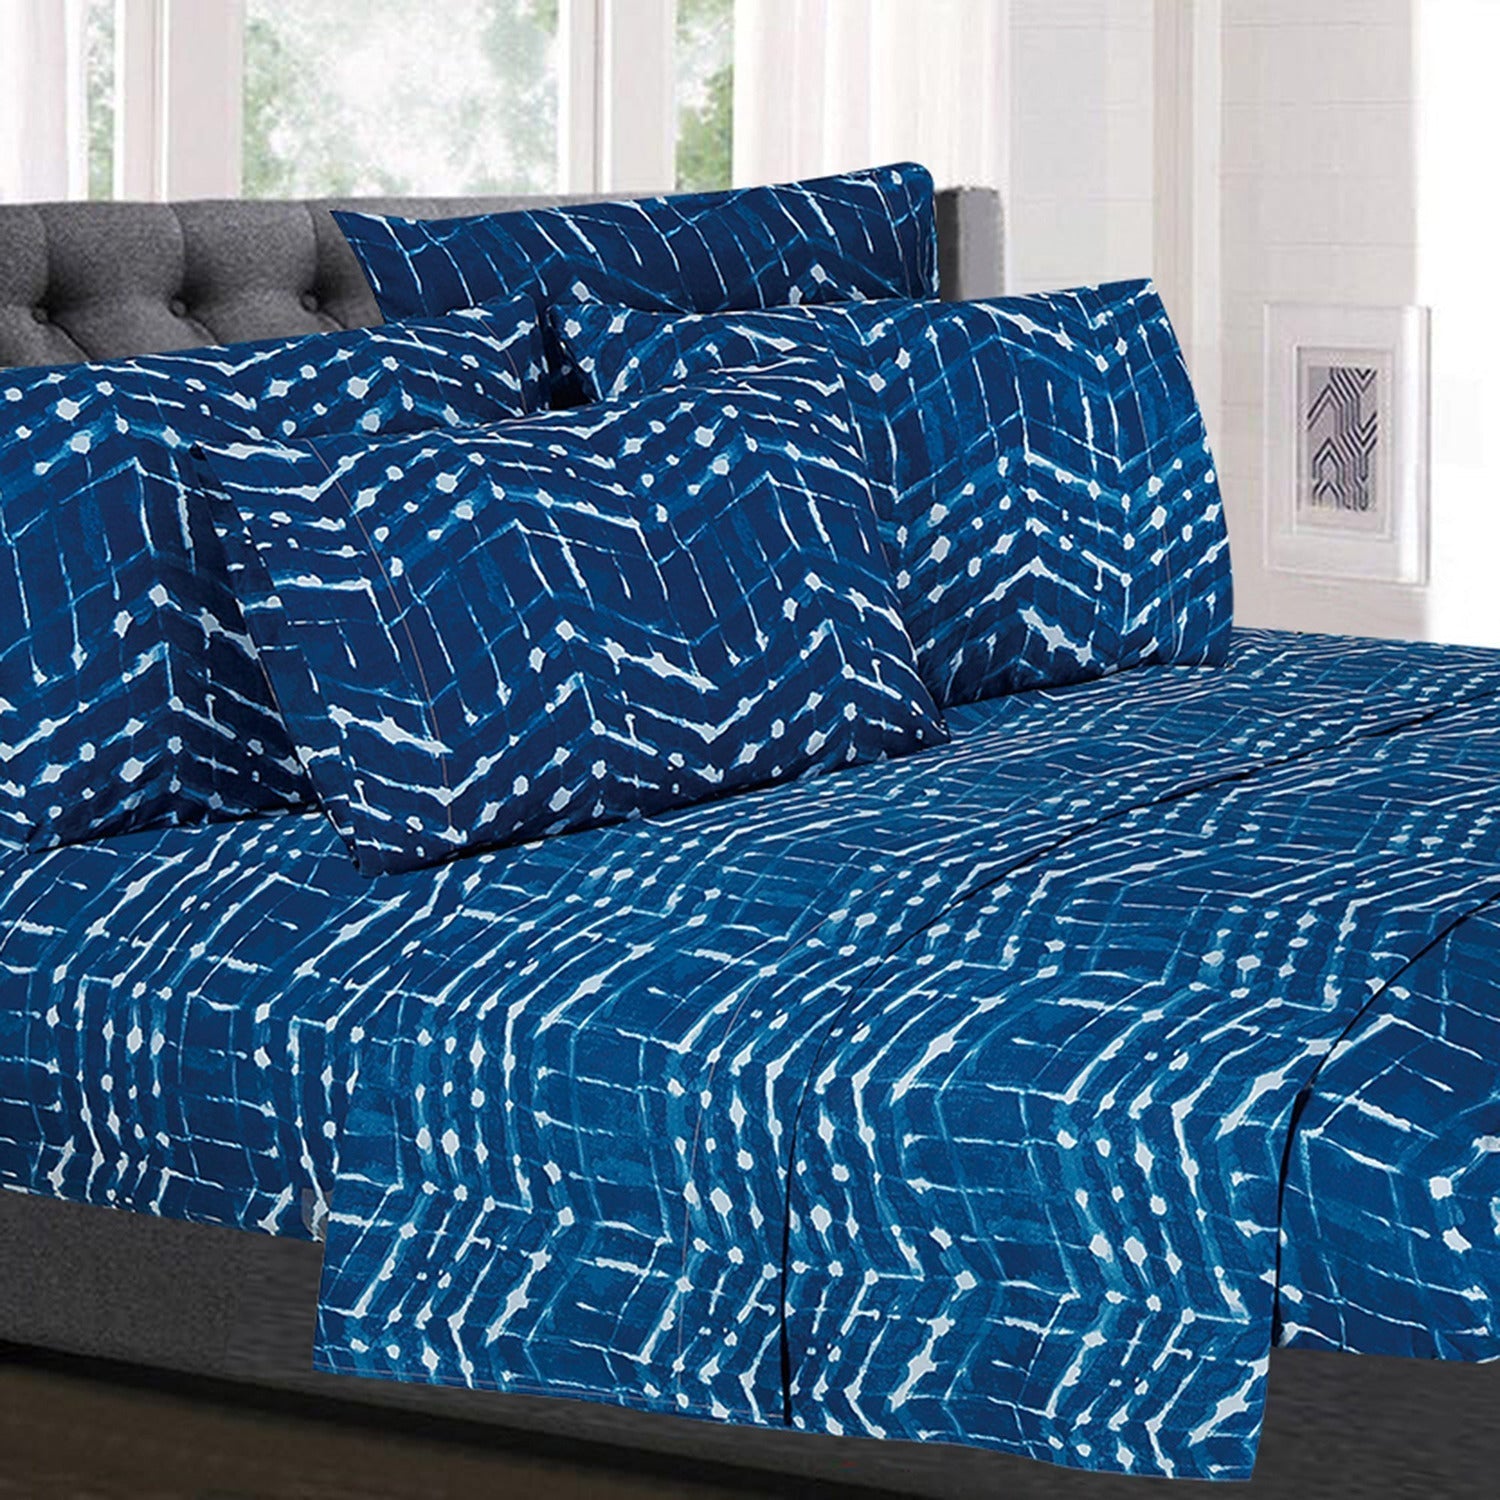 Deluxe 6-Piece Bed Sheet Set (Monroe) - Bed